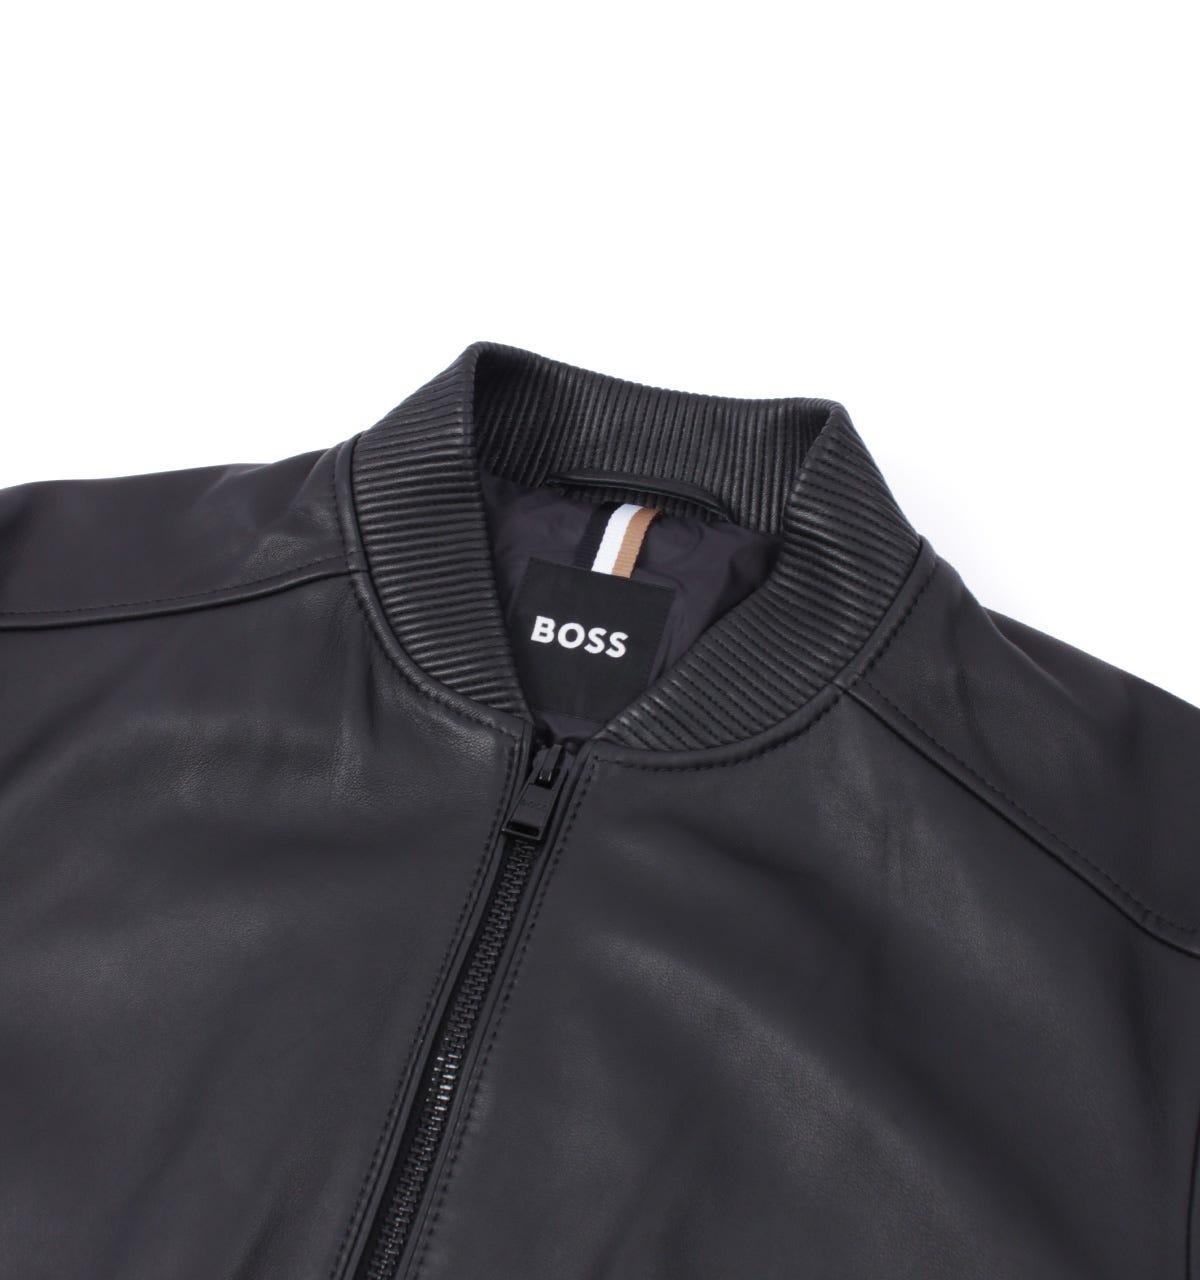 BOSS by HUGO BOSS Malban Leather Jacket in Black for Men | Lyst